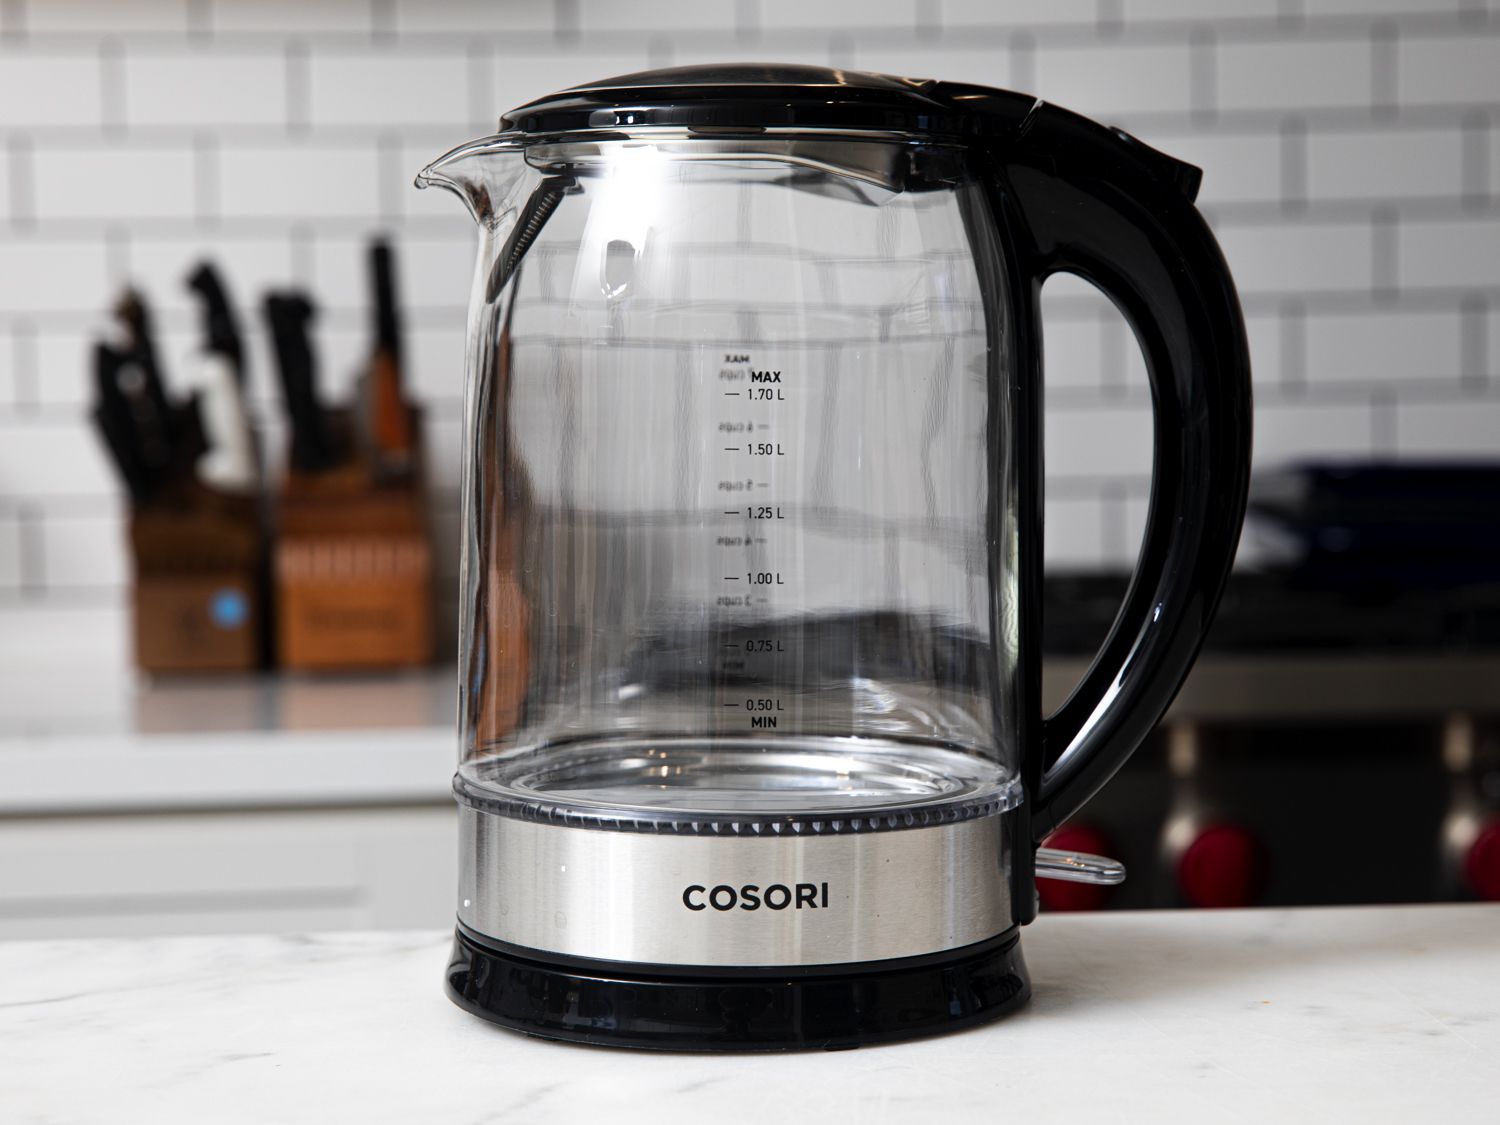 Cosori tea kettle on a marble kitchen countertop